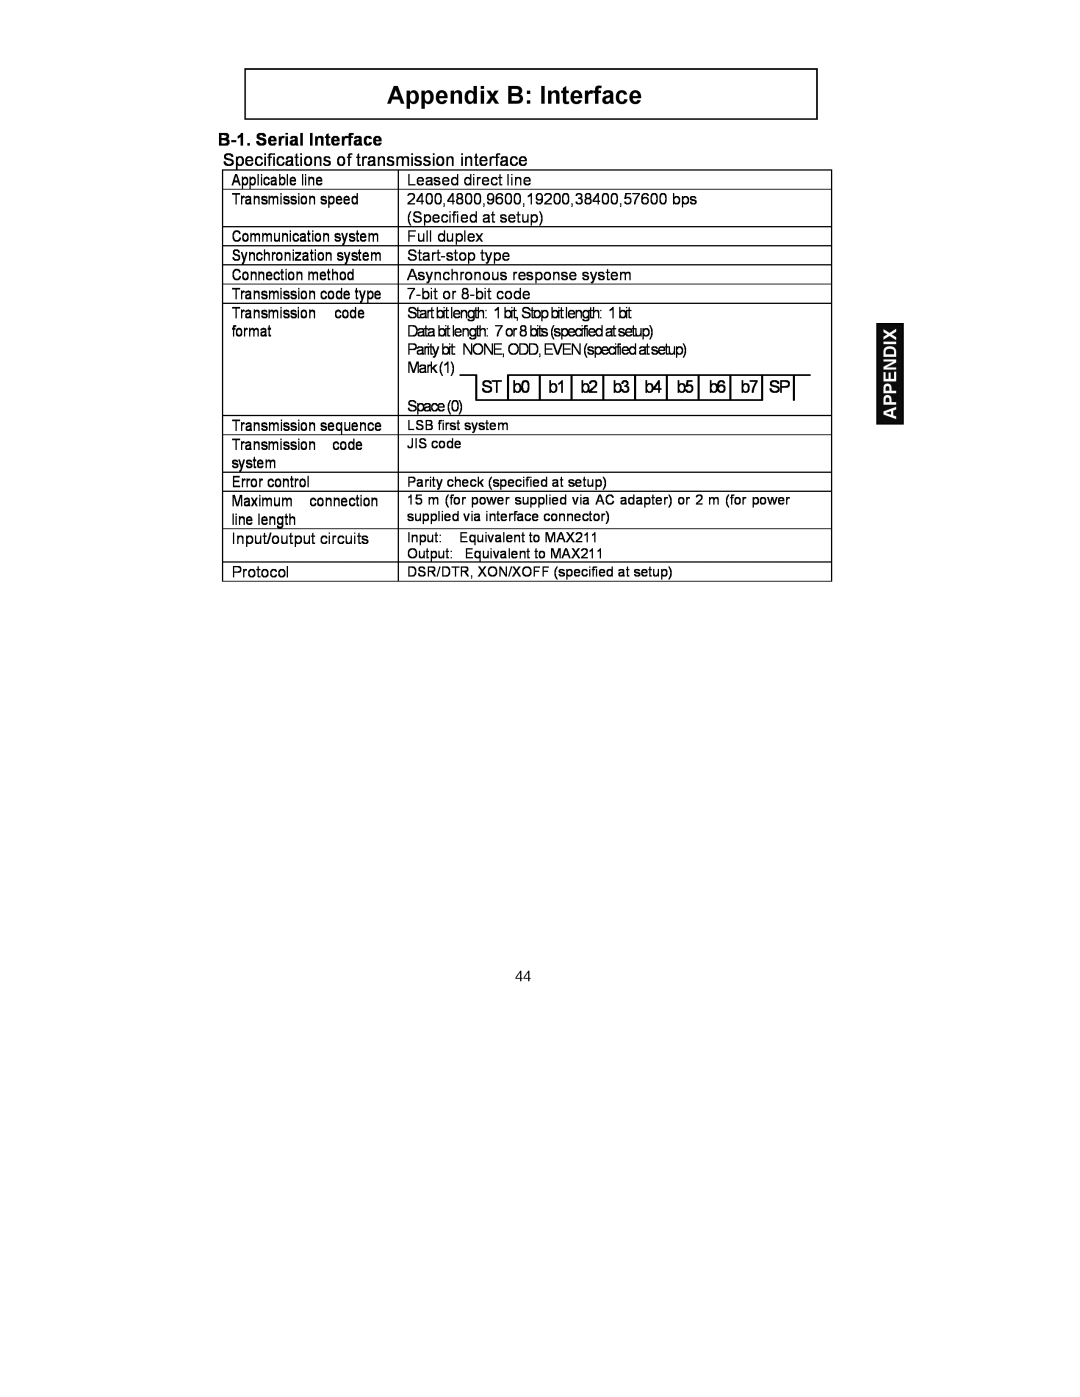 Fujitsu FP-410 user manual B-1. Serial Interface, Appendix B Interface 